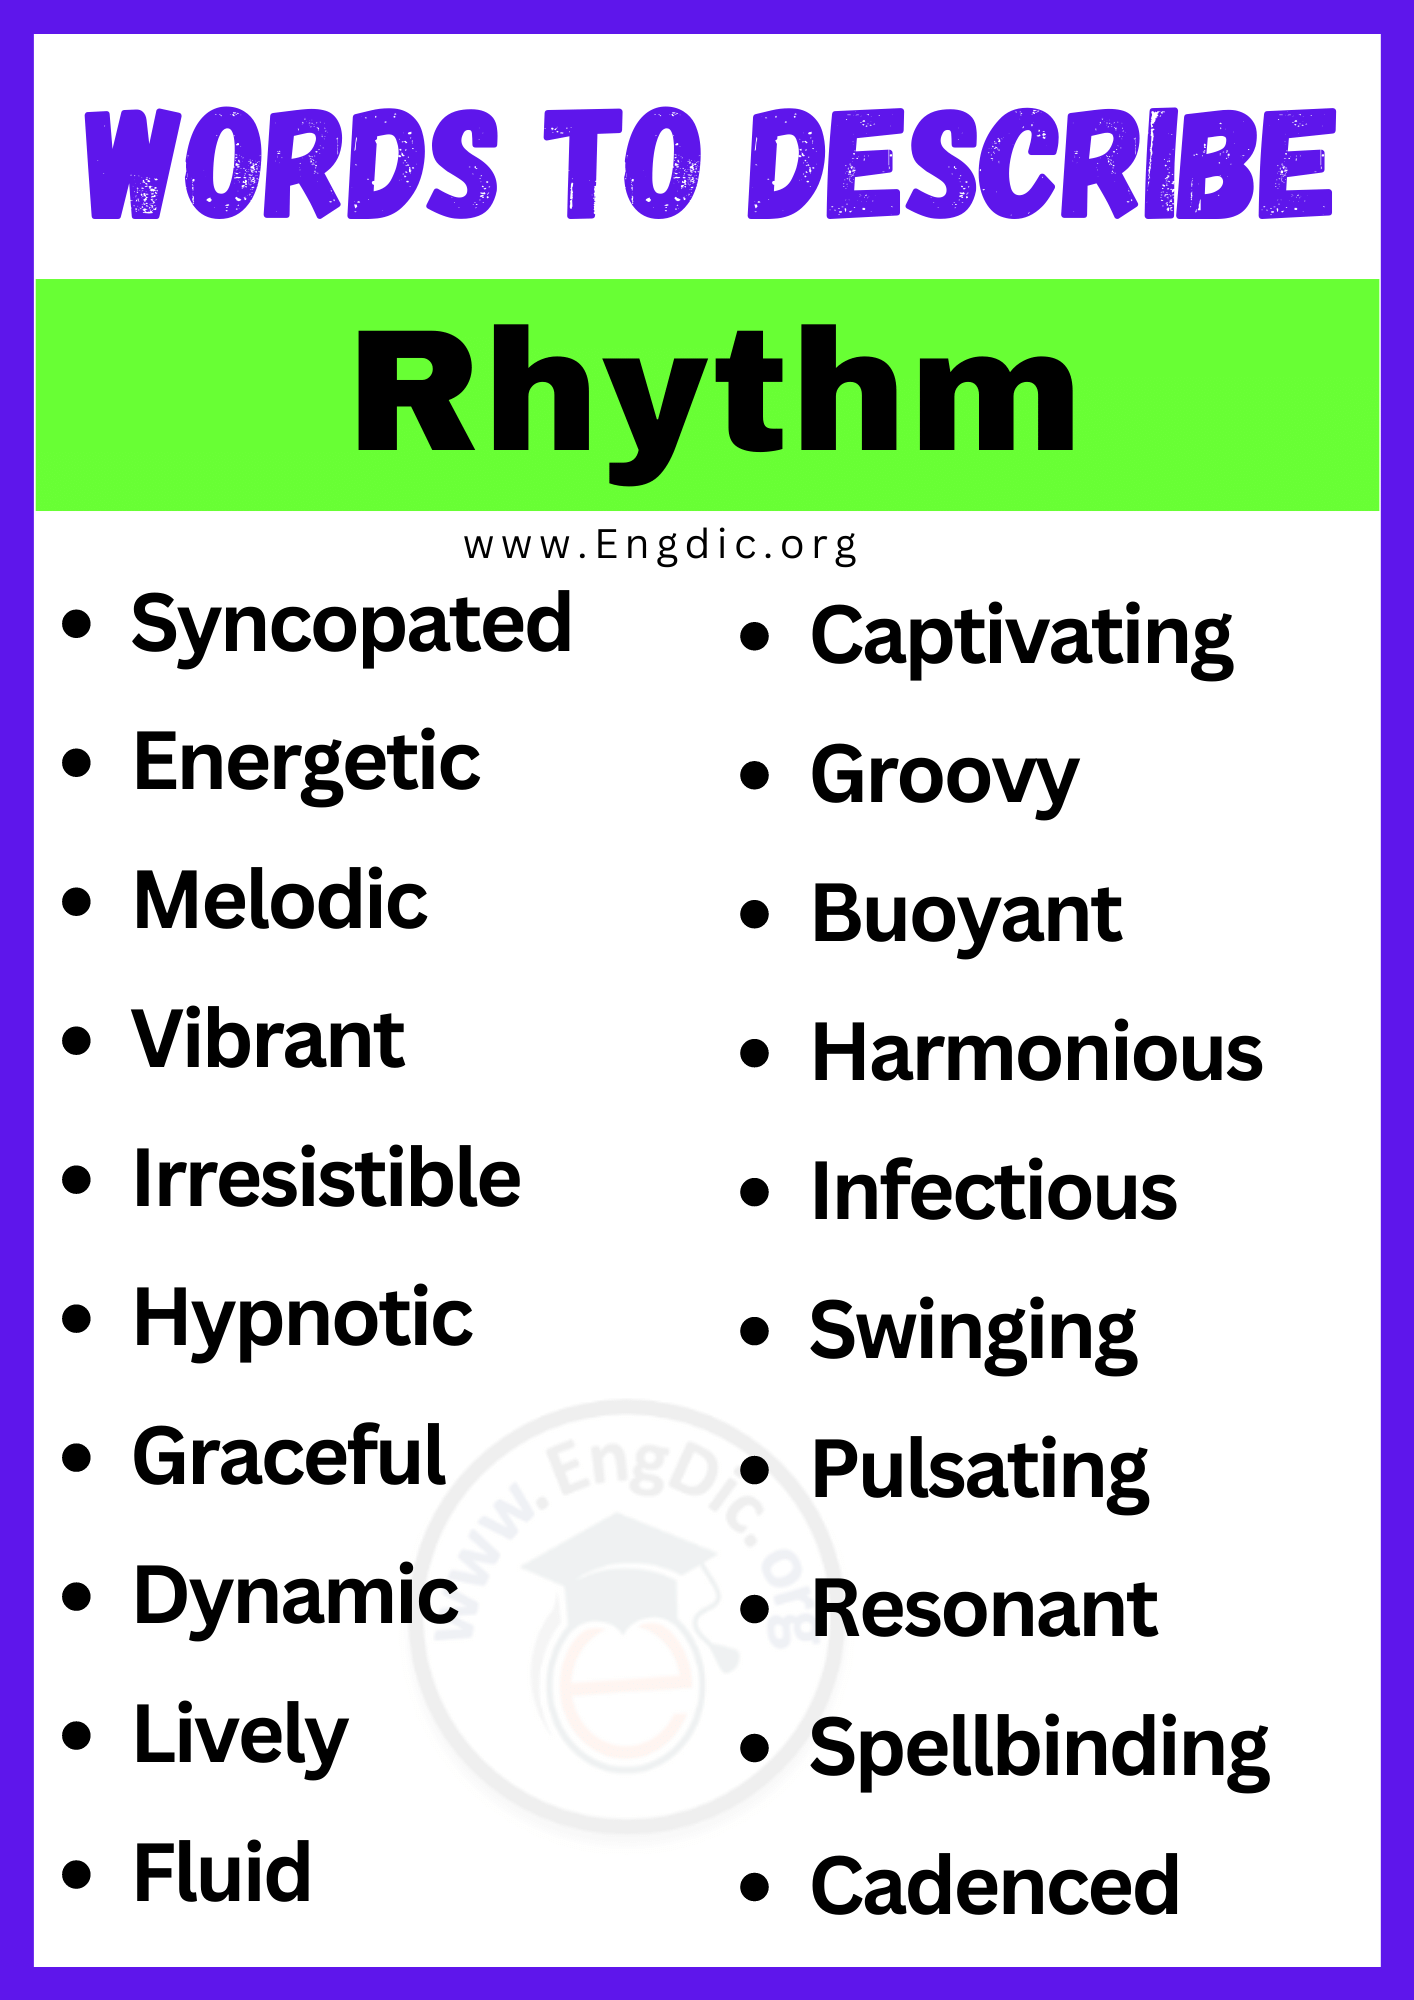 Words to Describe Rhythm